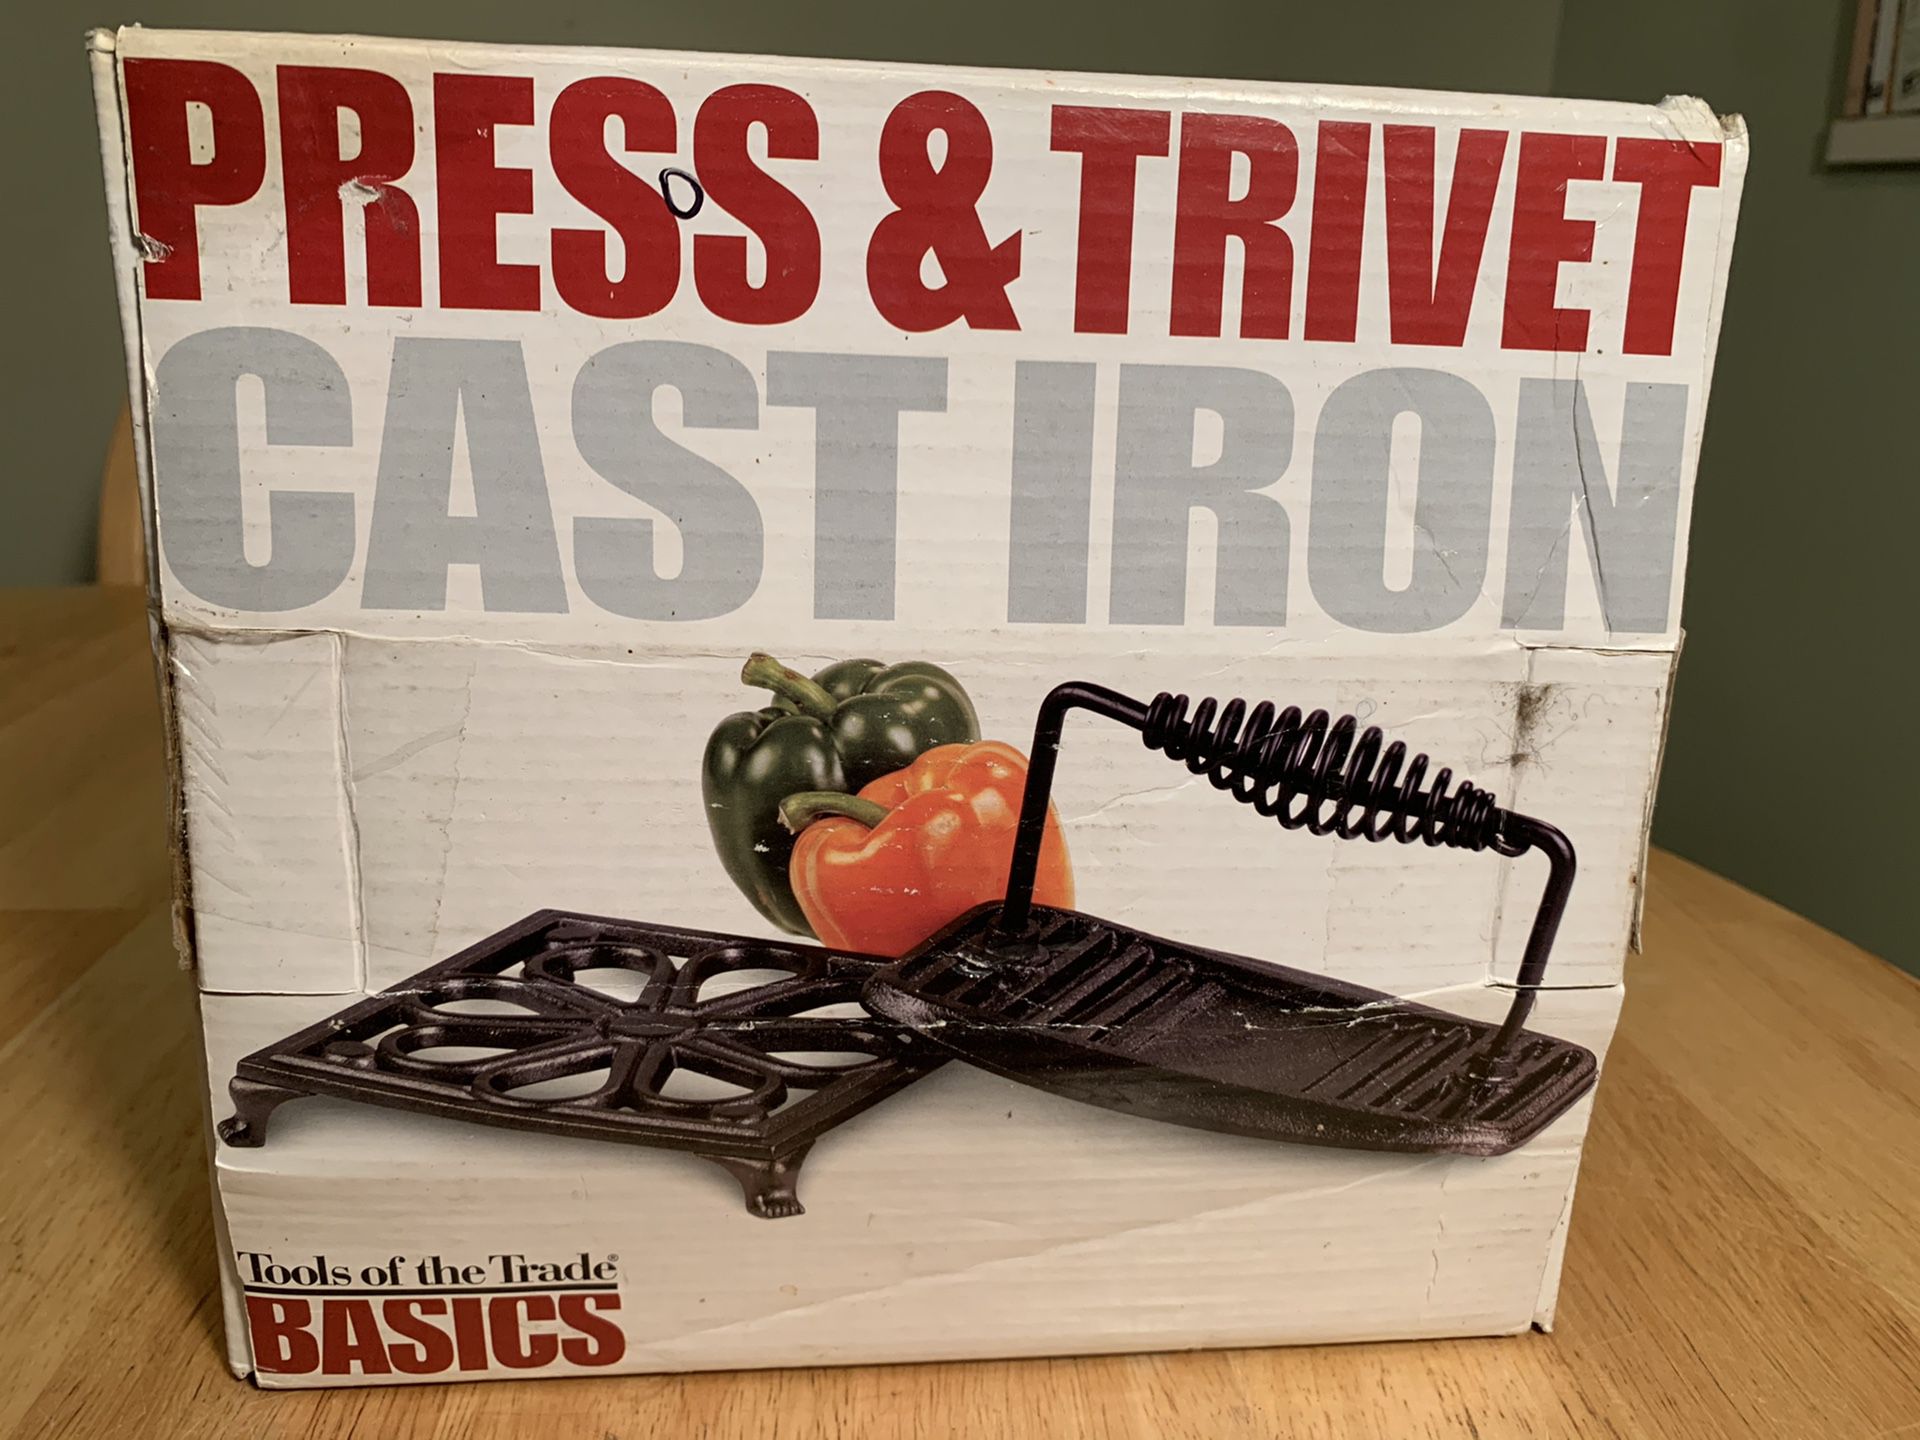 Tools of the Trade Basics Cast Iron Press and Trivet